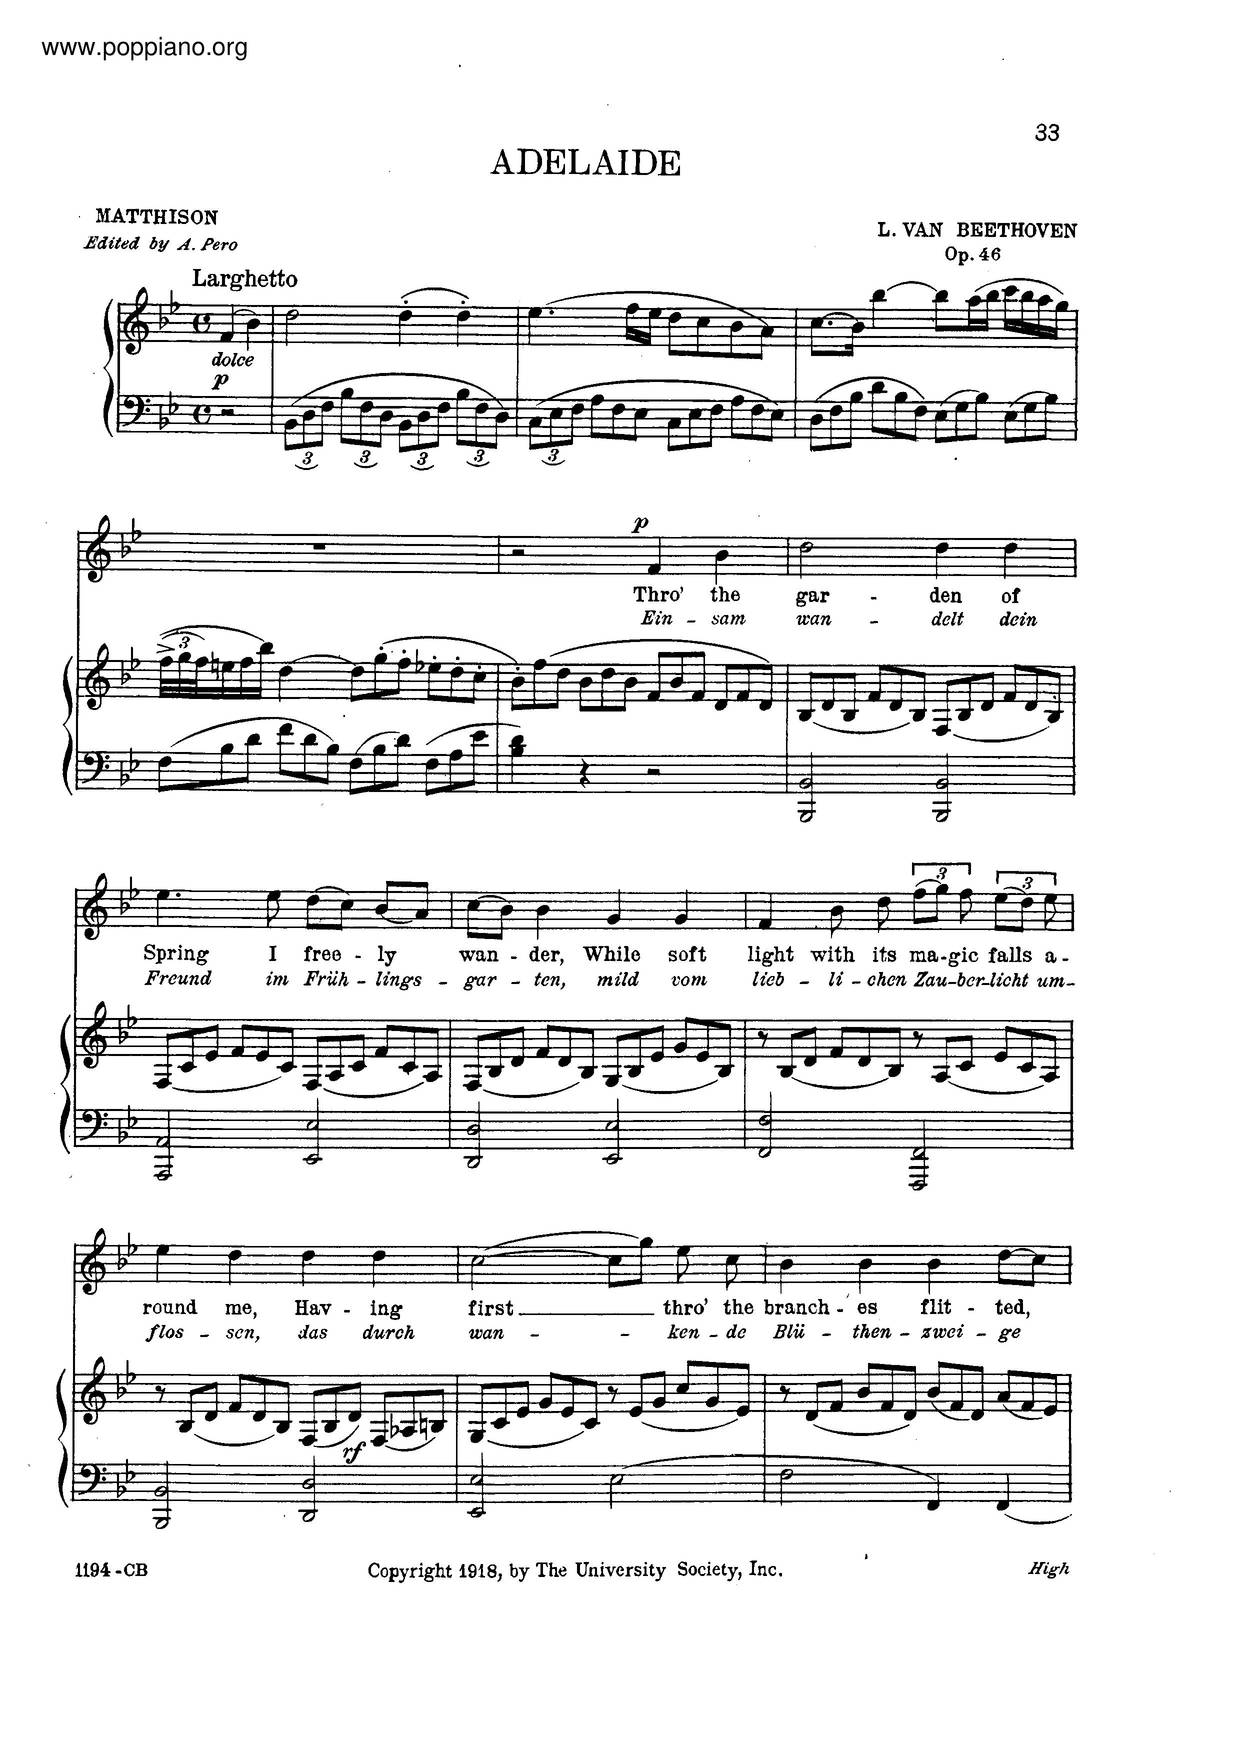 Adelaide, Op. 46 Score